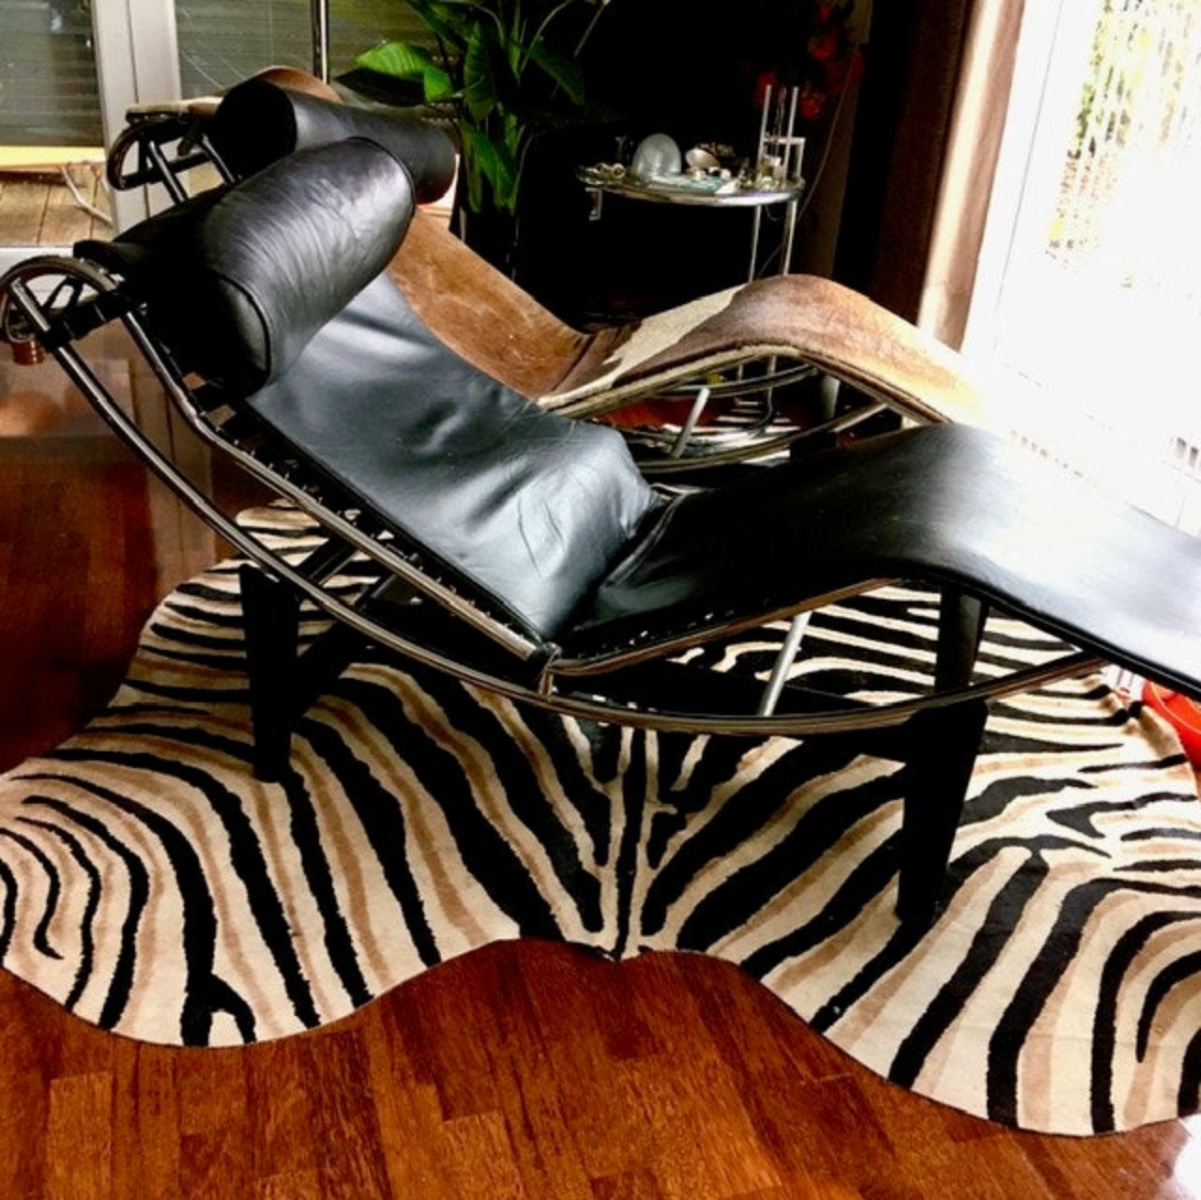 Genuine Zebra Print Cowhide Rug Average Size: 7' X 6' Black Stripes, Grey/Light Brown Inner Stripes Zebra Print Cowhide Rug